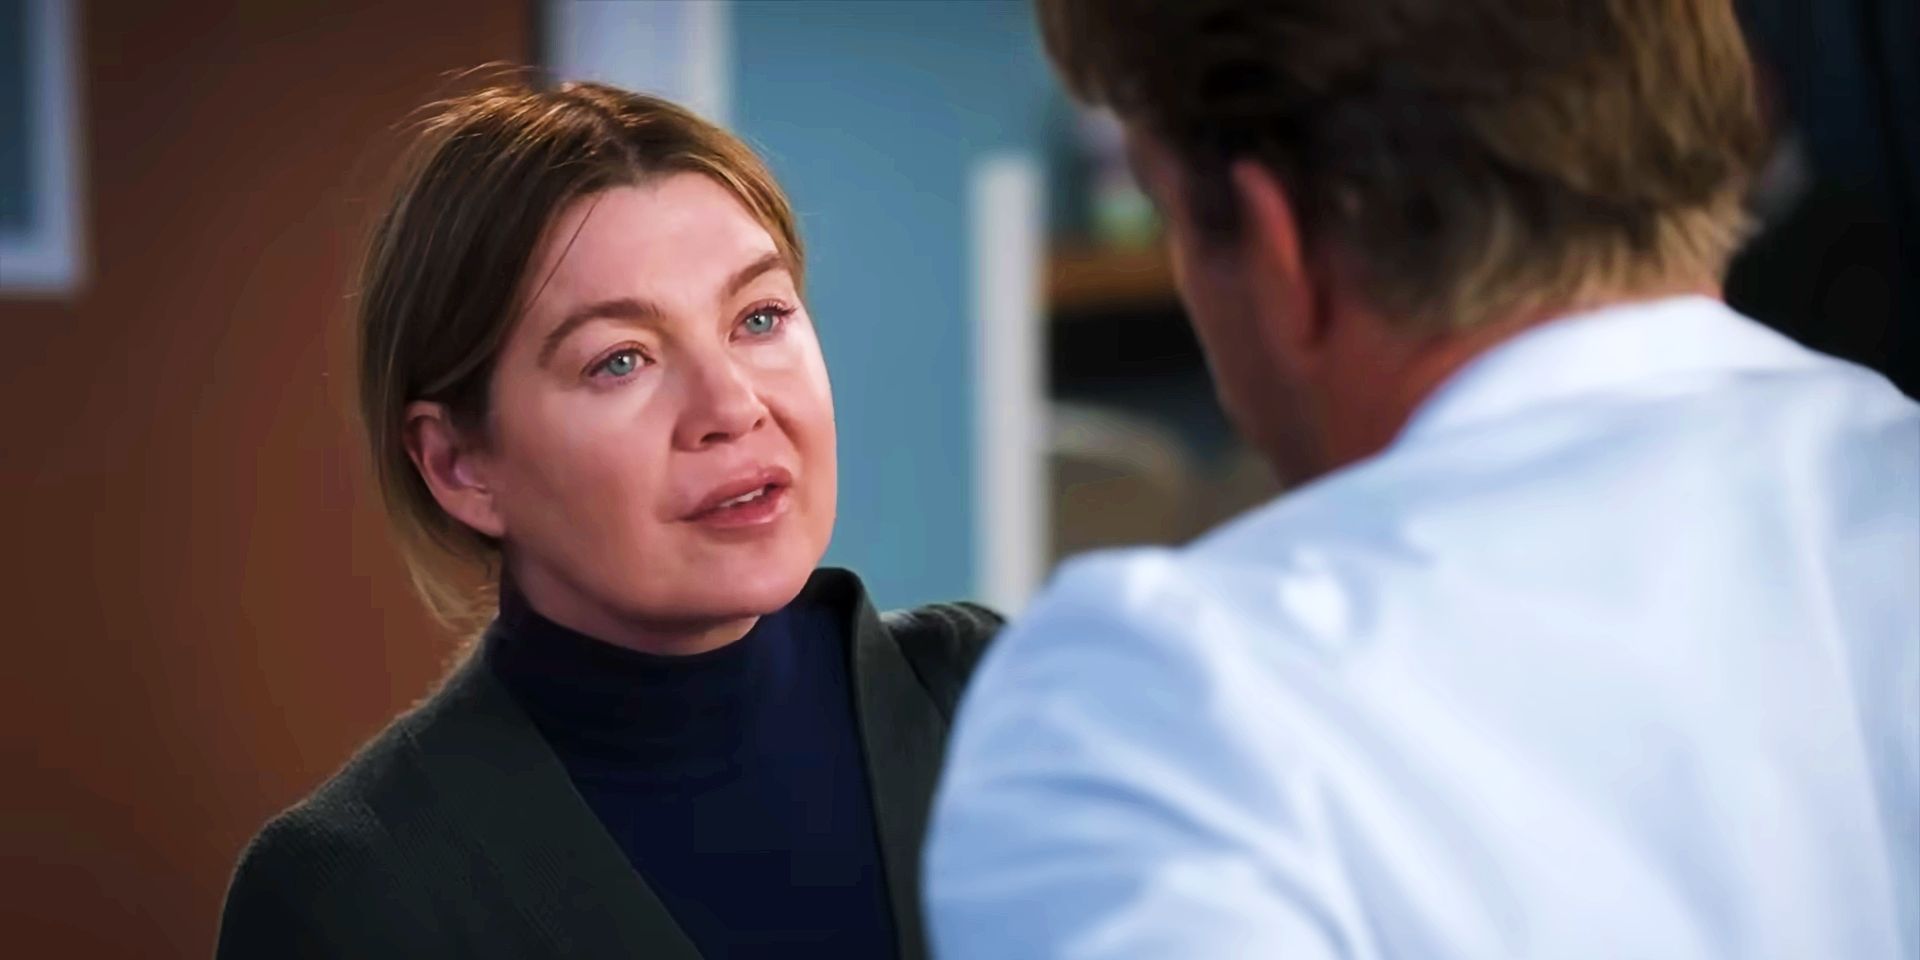 Ellen Pompeo as Meredith Grey talking to Nick (Scott Speedman) in Grey's Anatomy season 20 episode 1